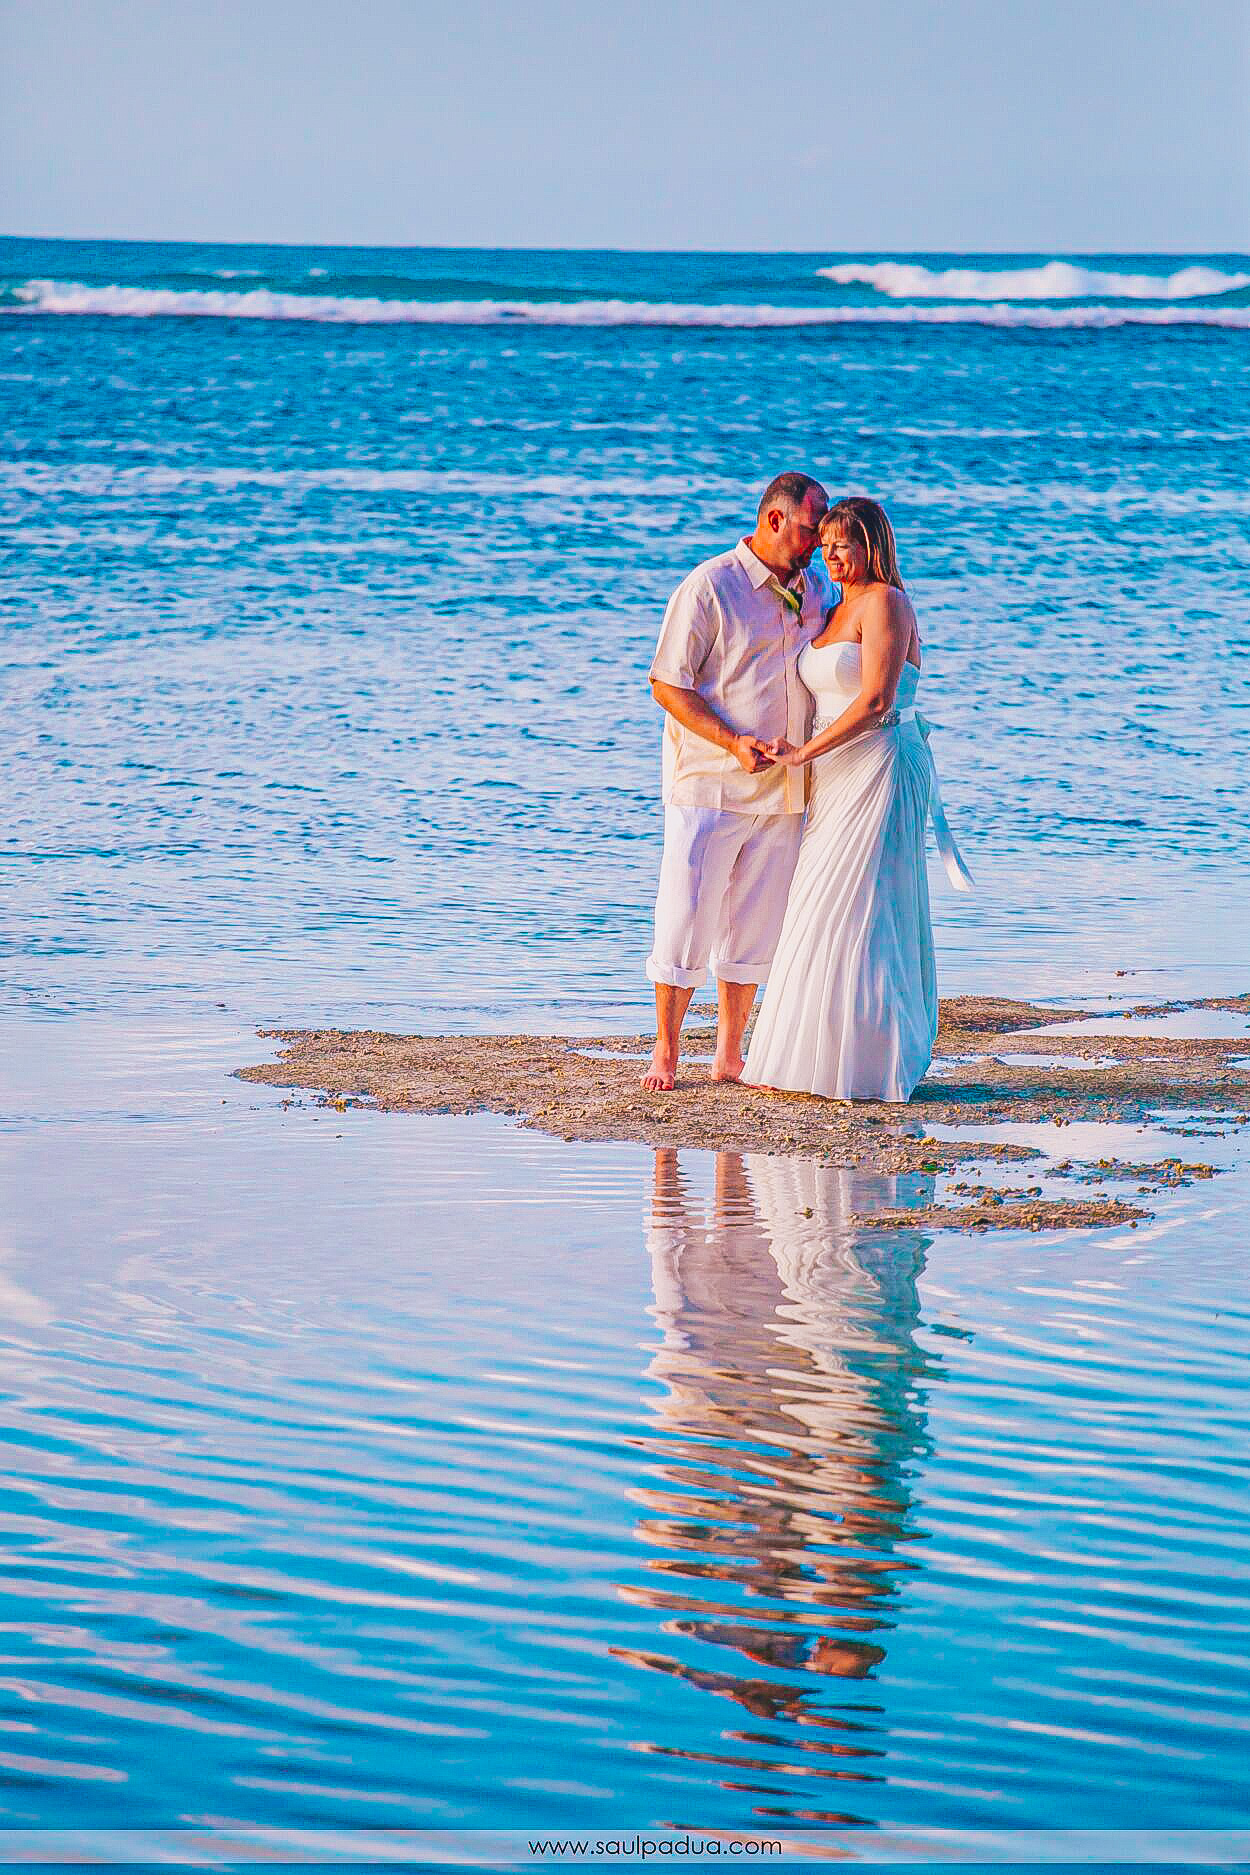 Stop Struggling to Plan Your  Destination Wedding in Puerto Rico!